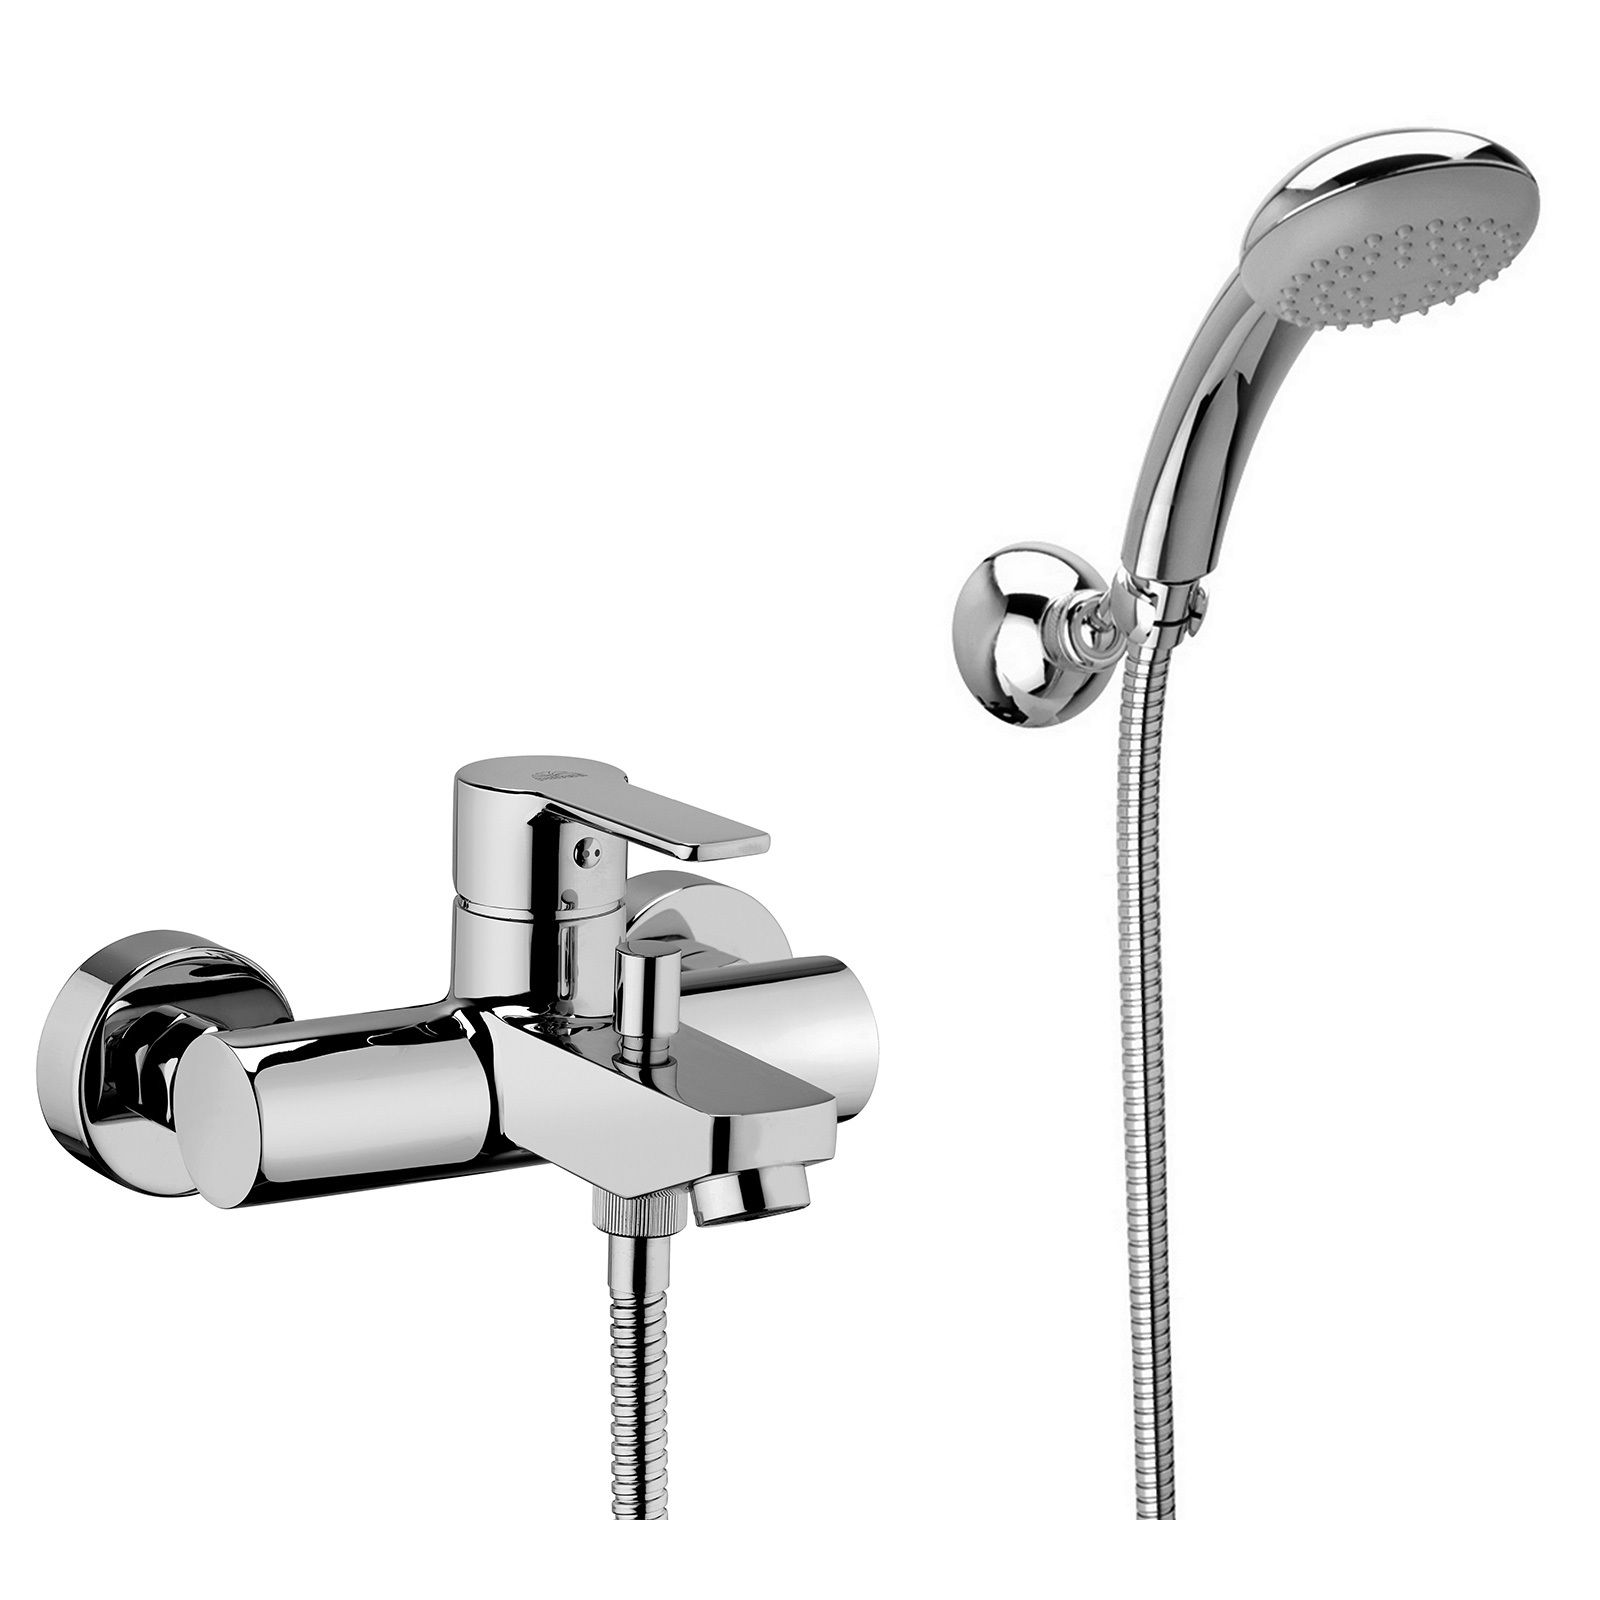 https://www.bagnoitalia.com/images/stories/virtuemart/product/Mixer-faucet-bathtub-RB26-1_1542730091_641.jpg